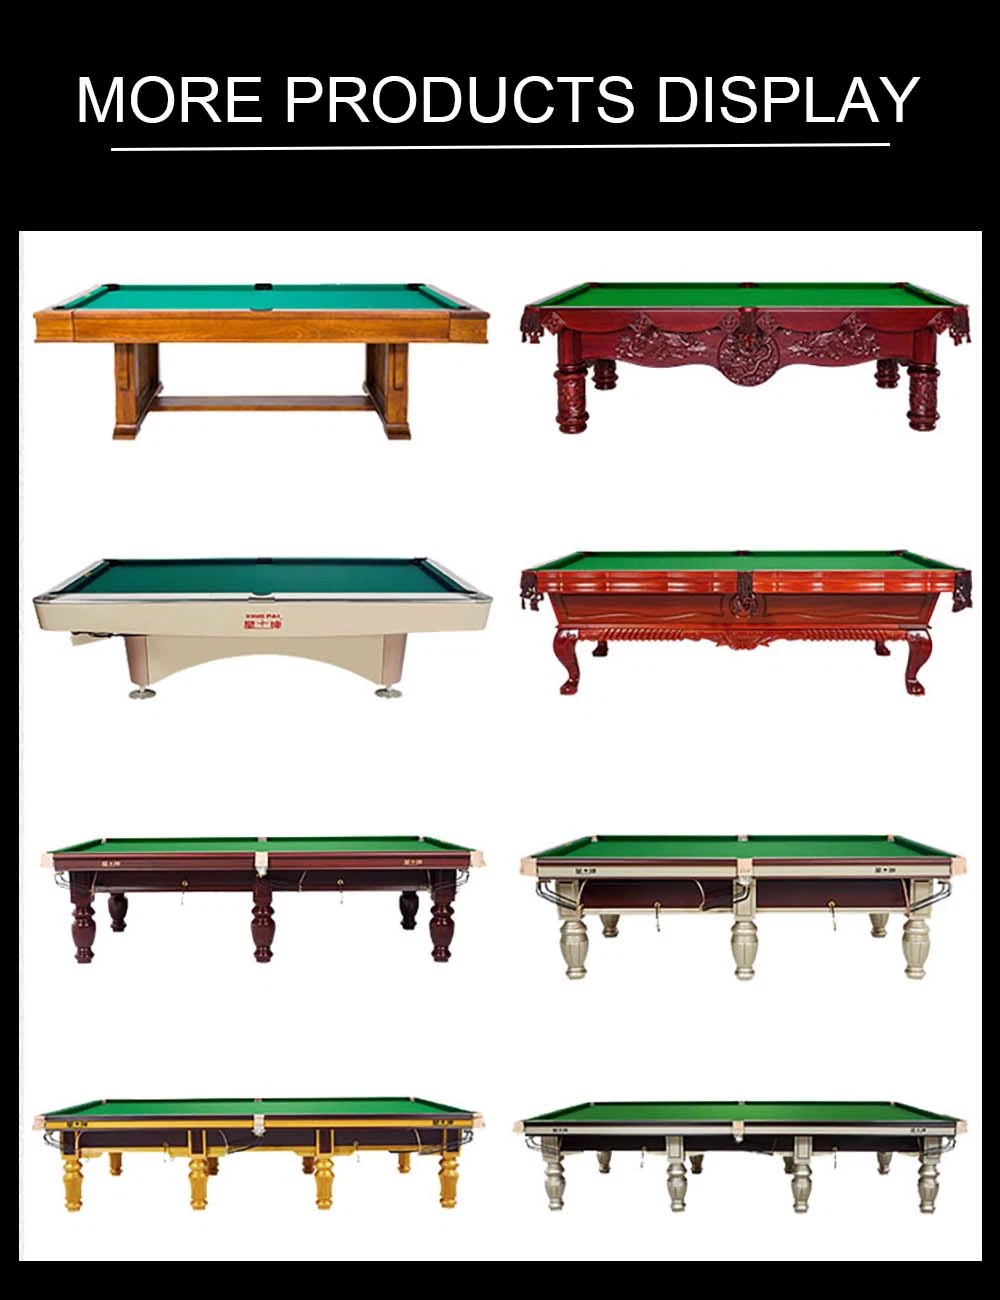 Indoor Sports 9 FT Billiard Table Folding Legs Portable Pool Snooker Table